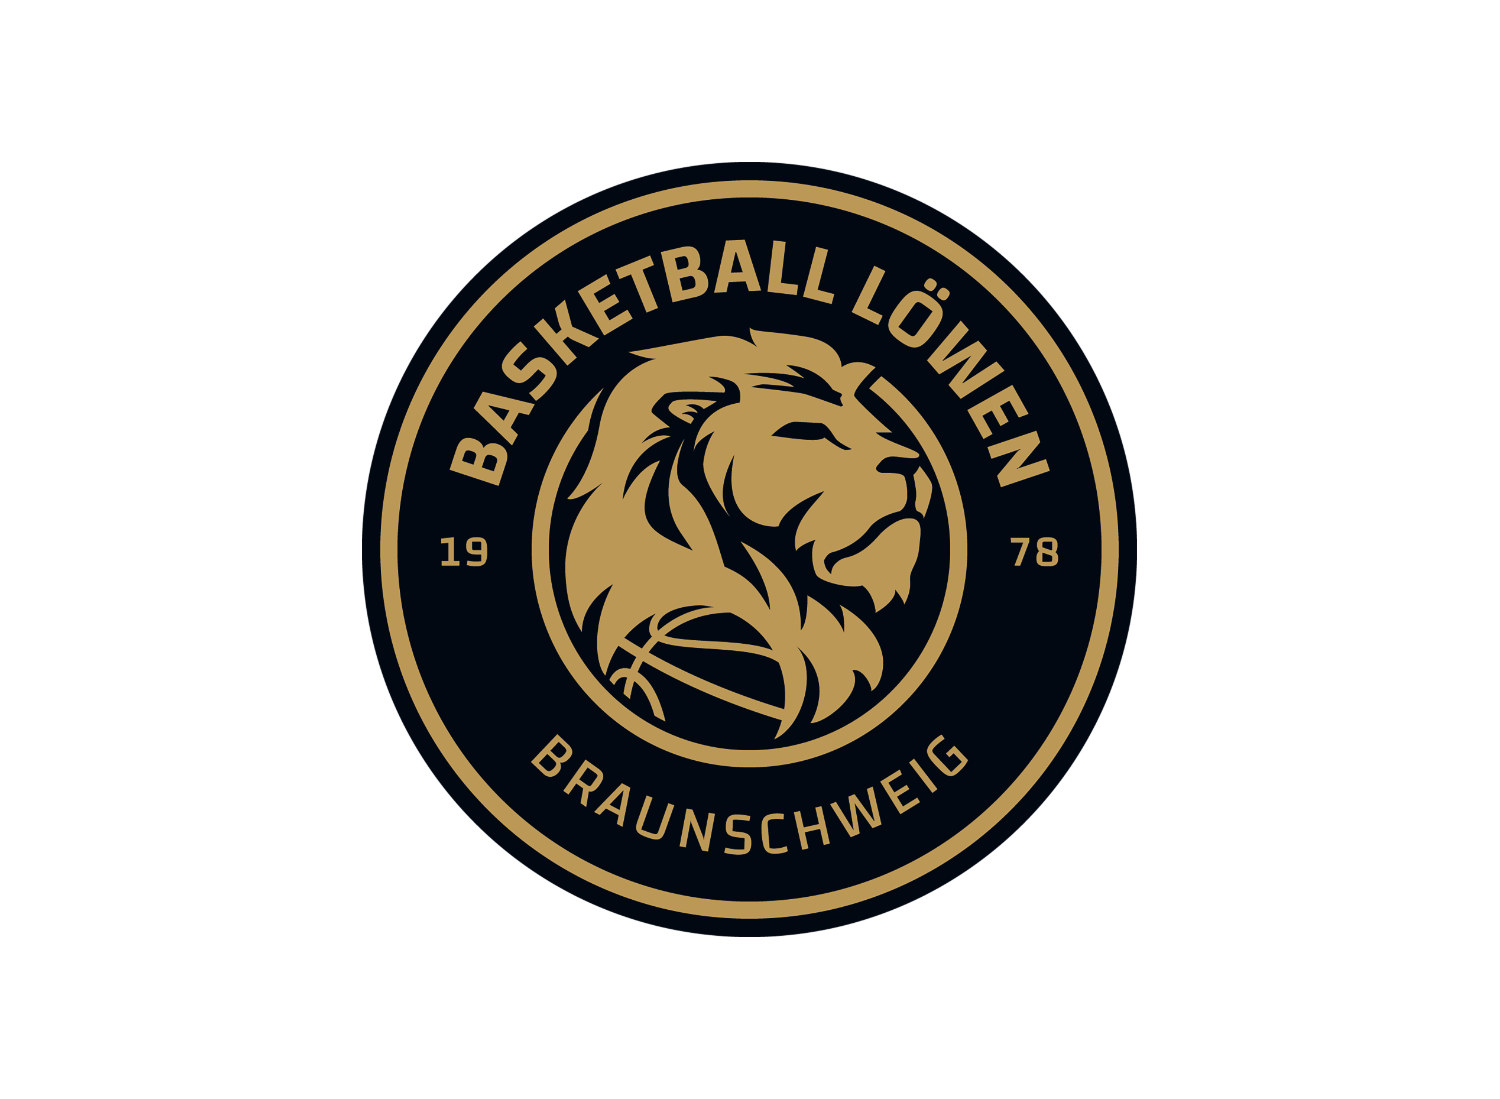 Löwen Basketball Braunschweig